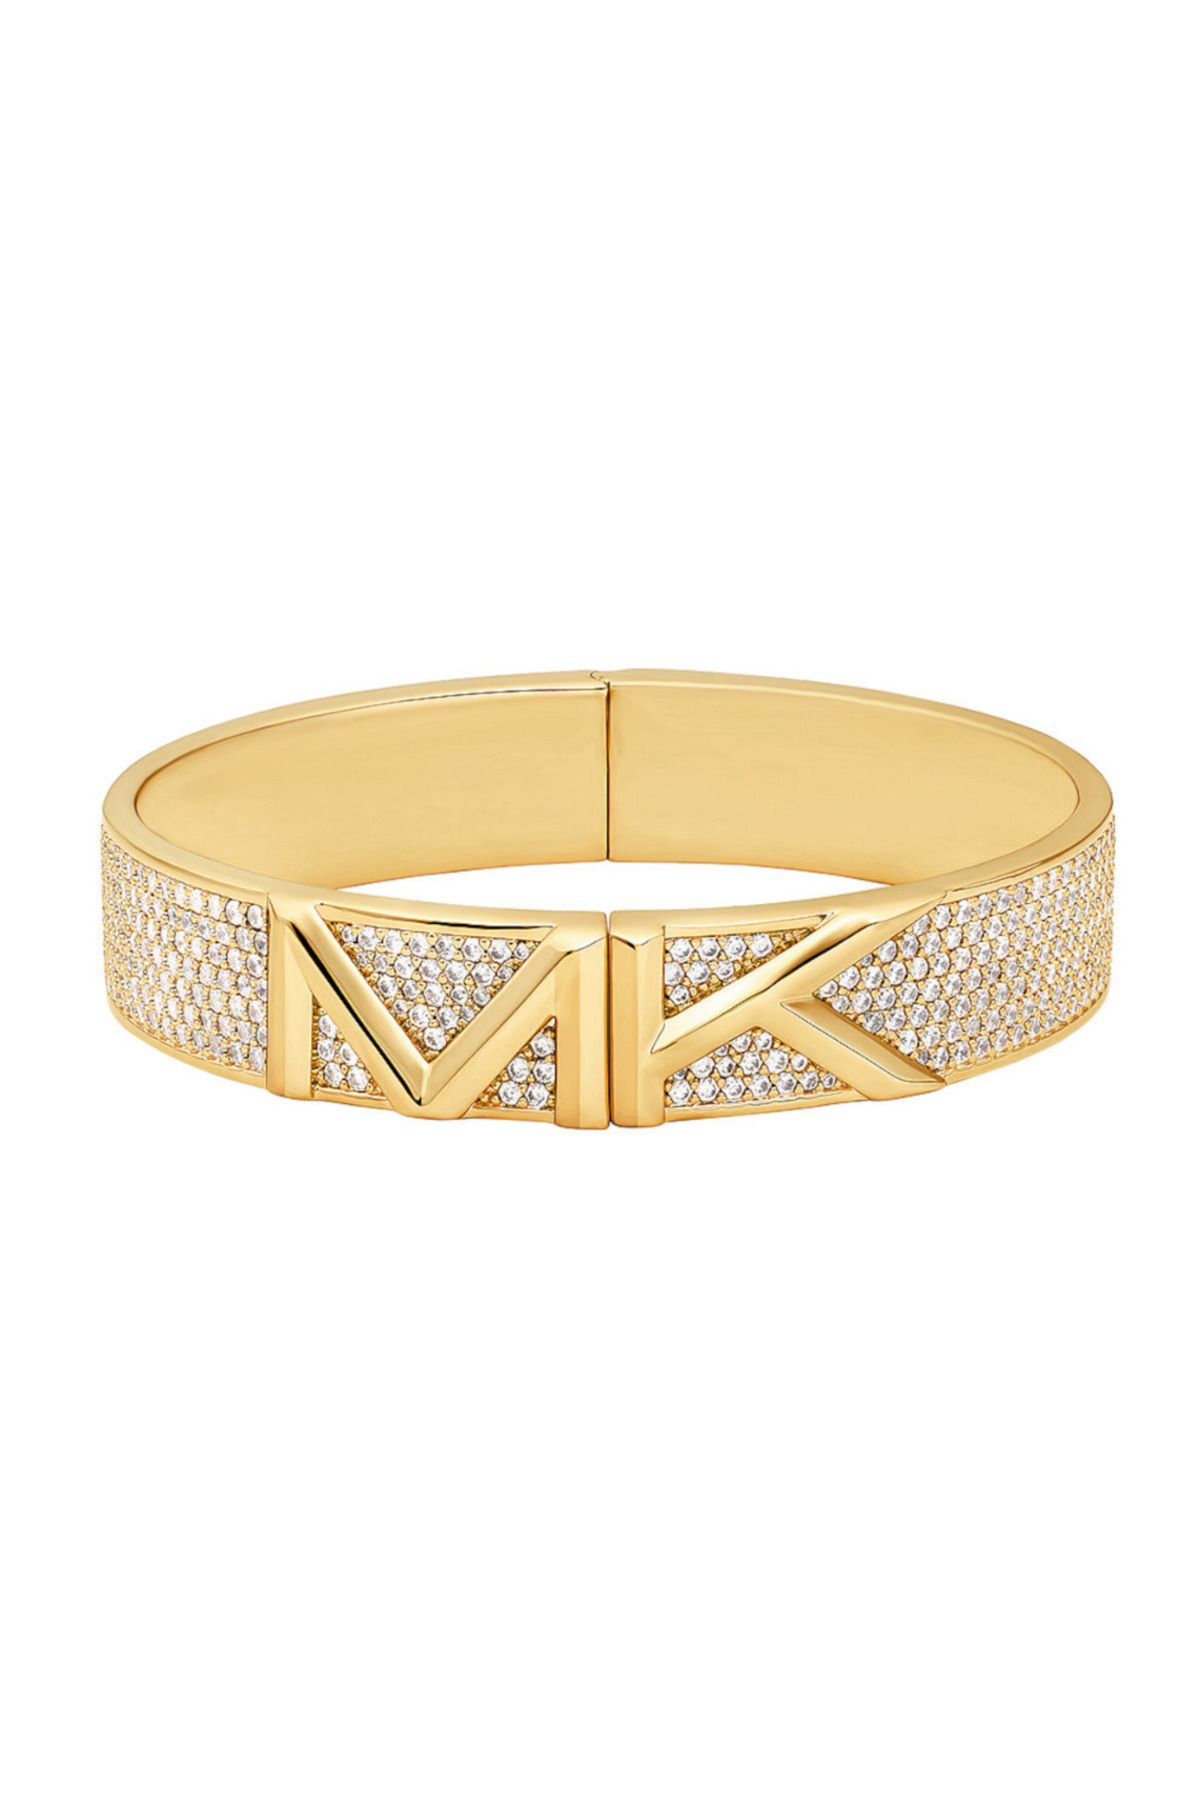 Michael Kors Jewellery Metallic Muse Bracelet